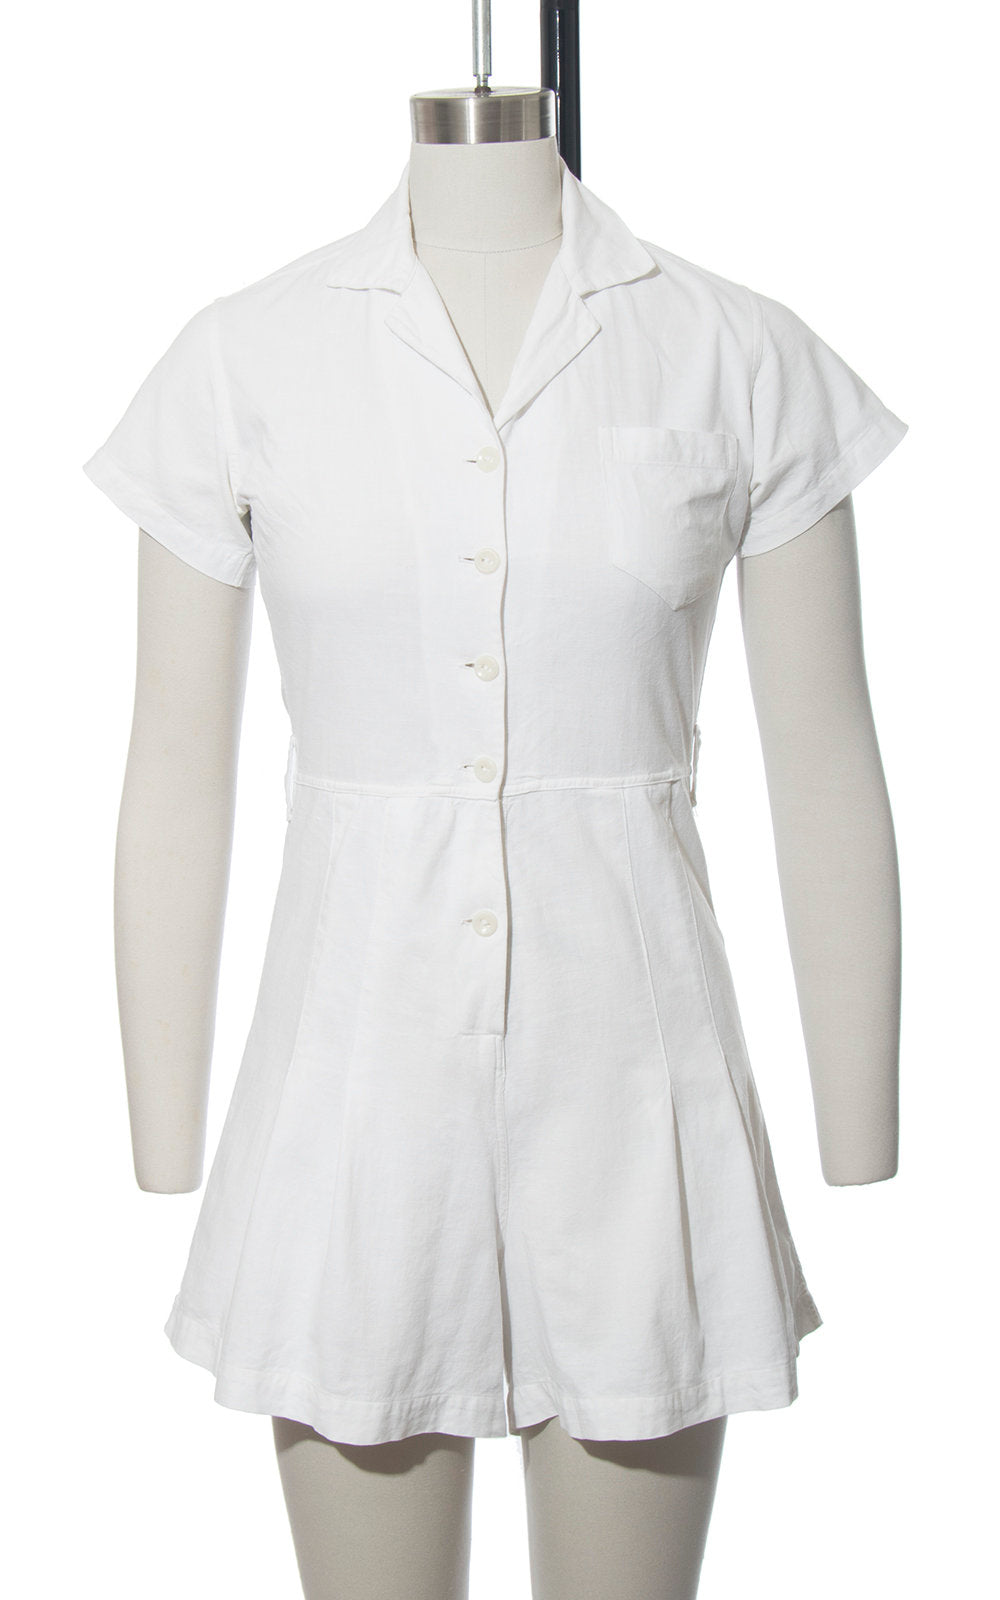 Vintage 1940s Playsuit | 40s White Cotton Romper Sportswear One Piece Gym Uniform (small)